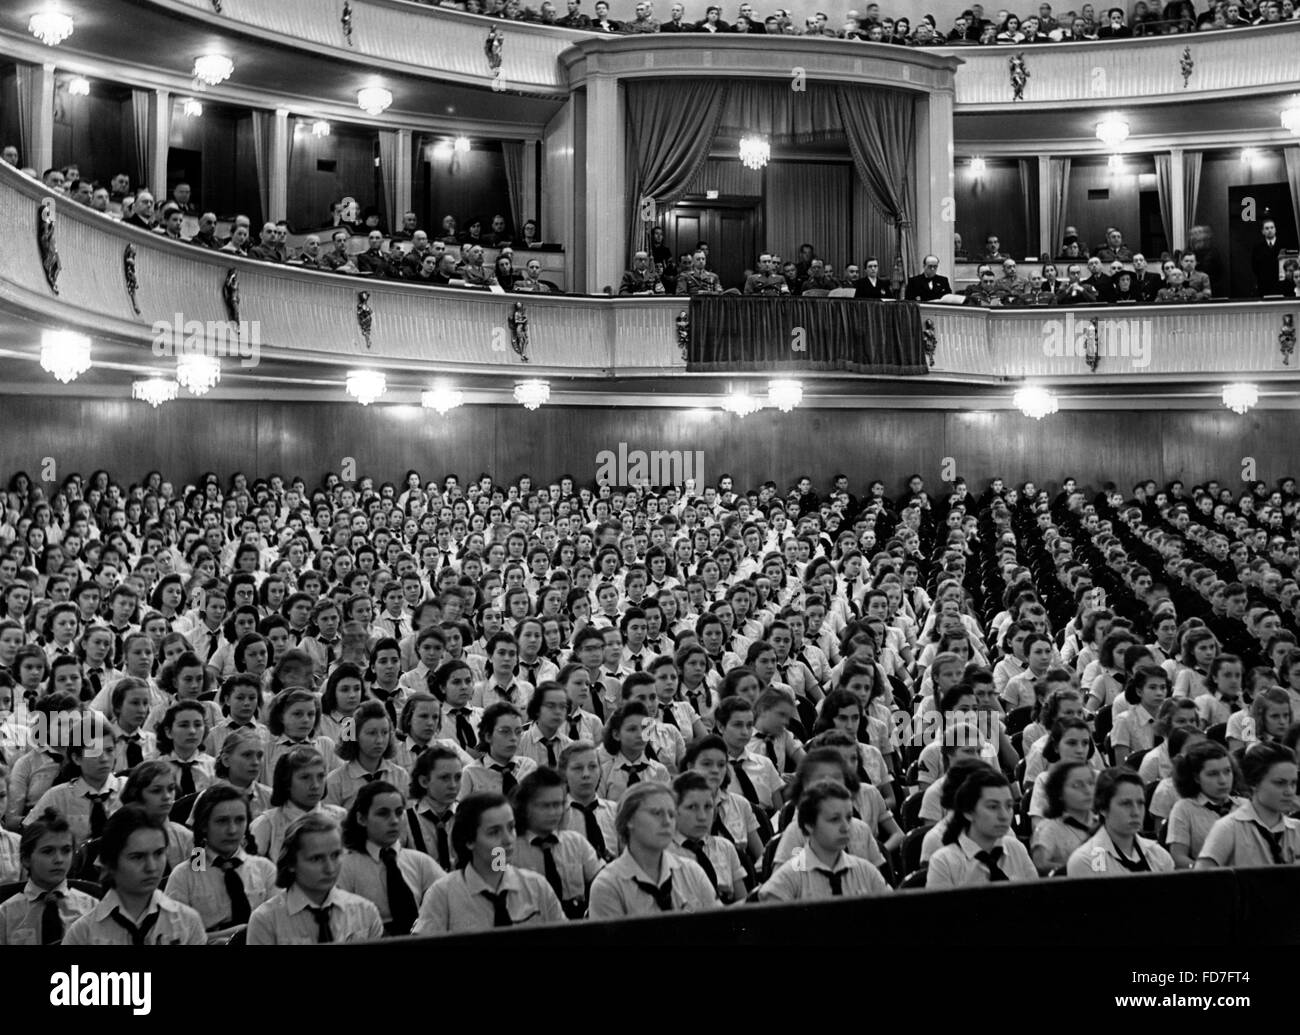 Verpflichtung der Jugend (Commitment of the Youth) ceremony at the Deutsche Opernhaus, 1942 Stock Photo